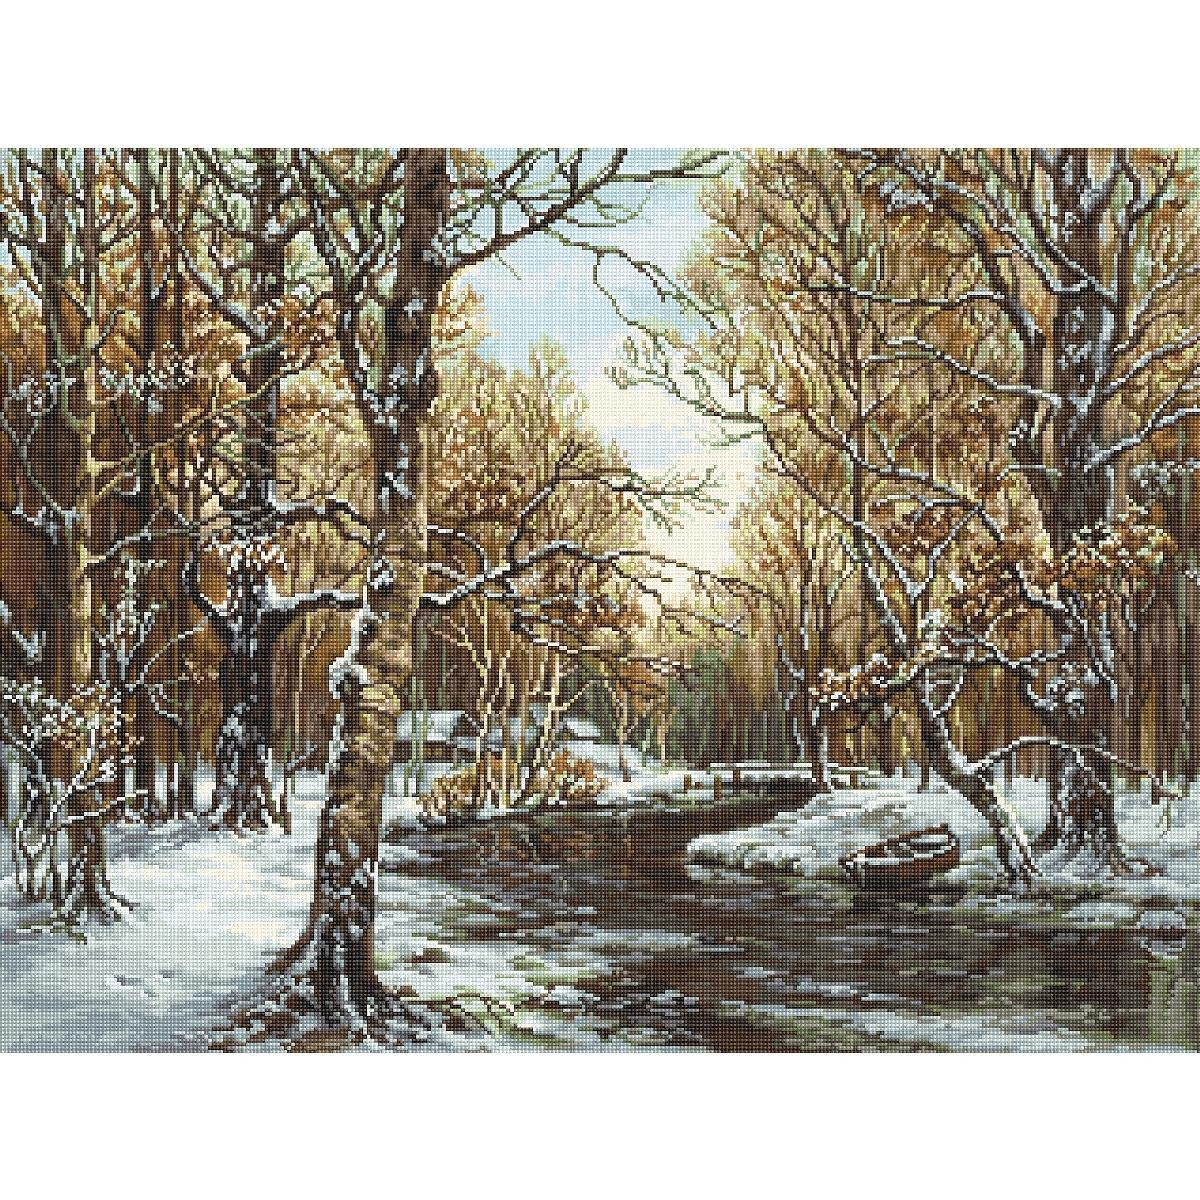 Un tranquilo paisaje invernal muestra un bosque cubierto...